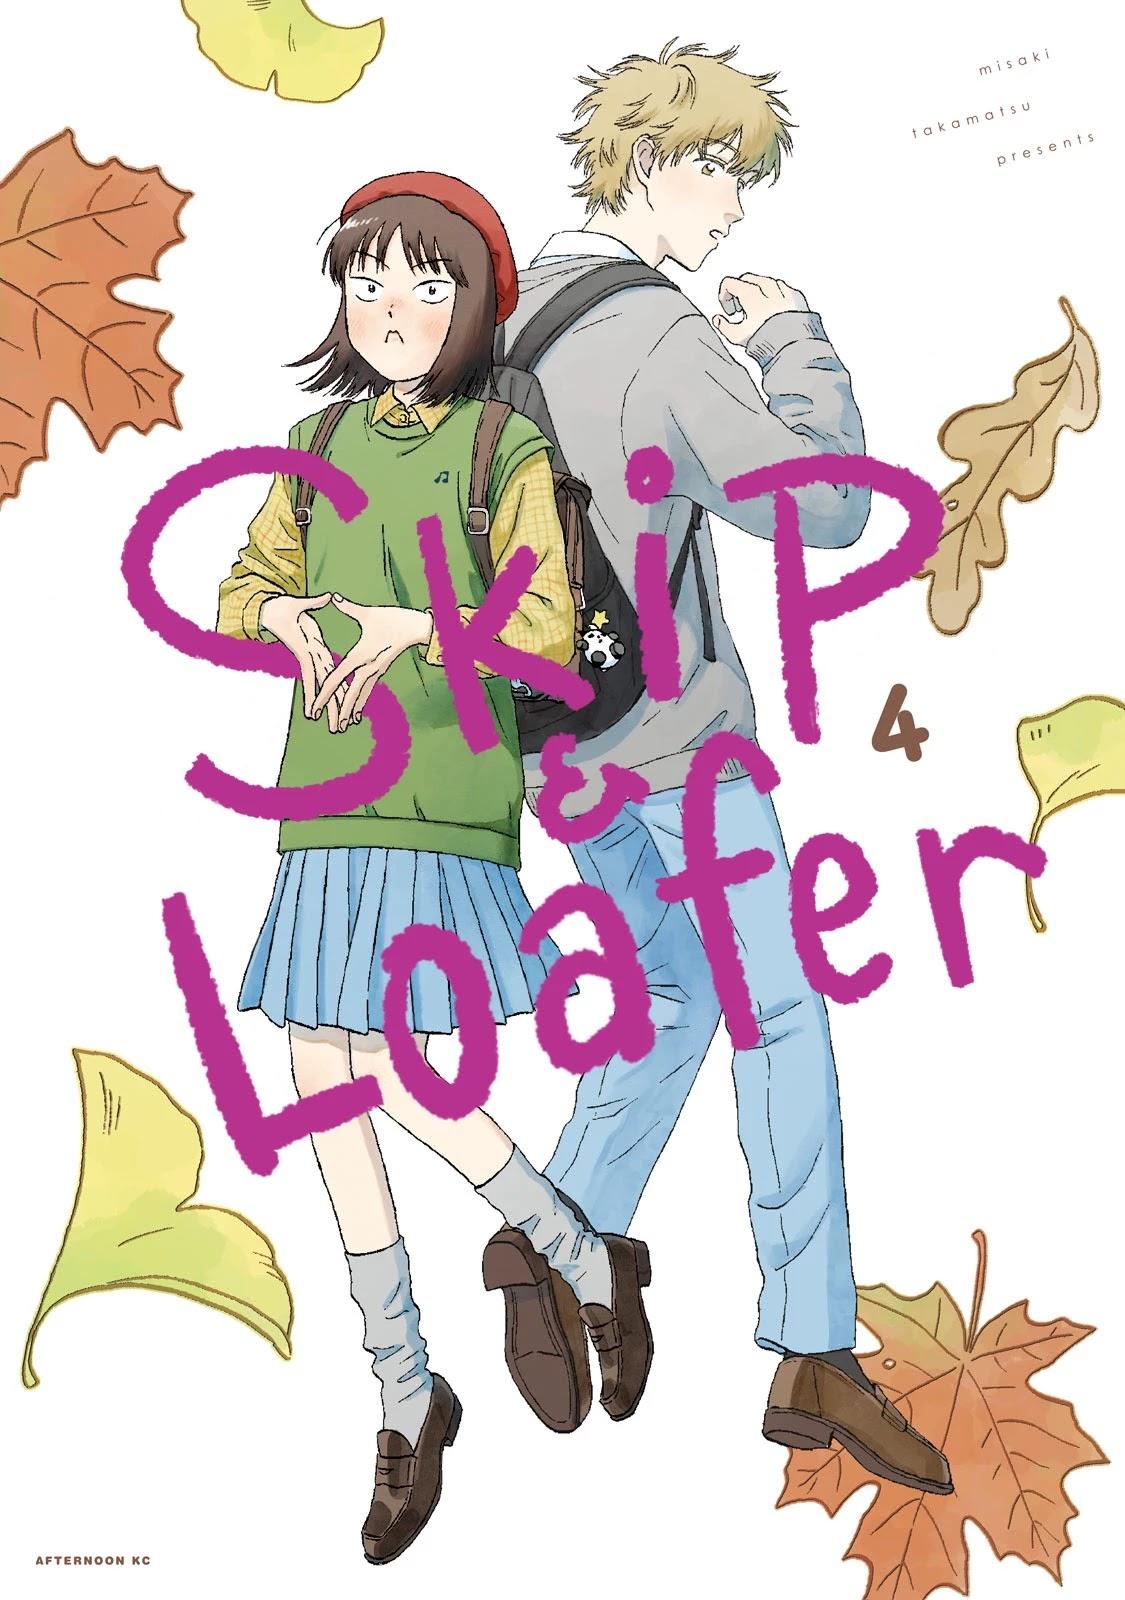 Read Skip To Loafer Chapter 41: Fluffy Spring on Mangakakalot